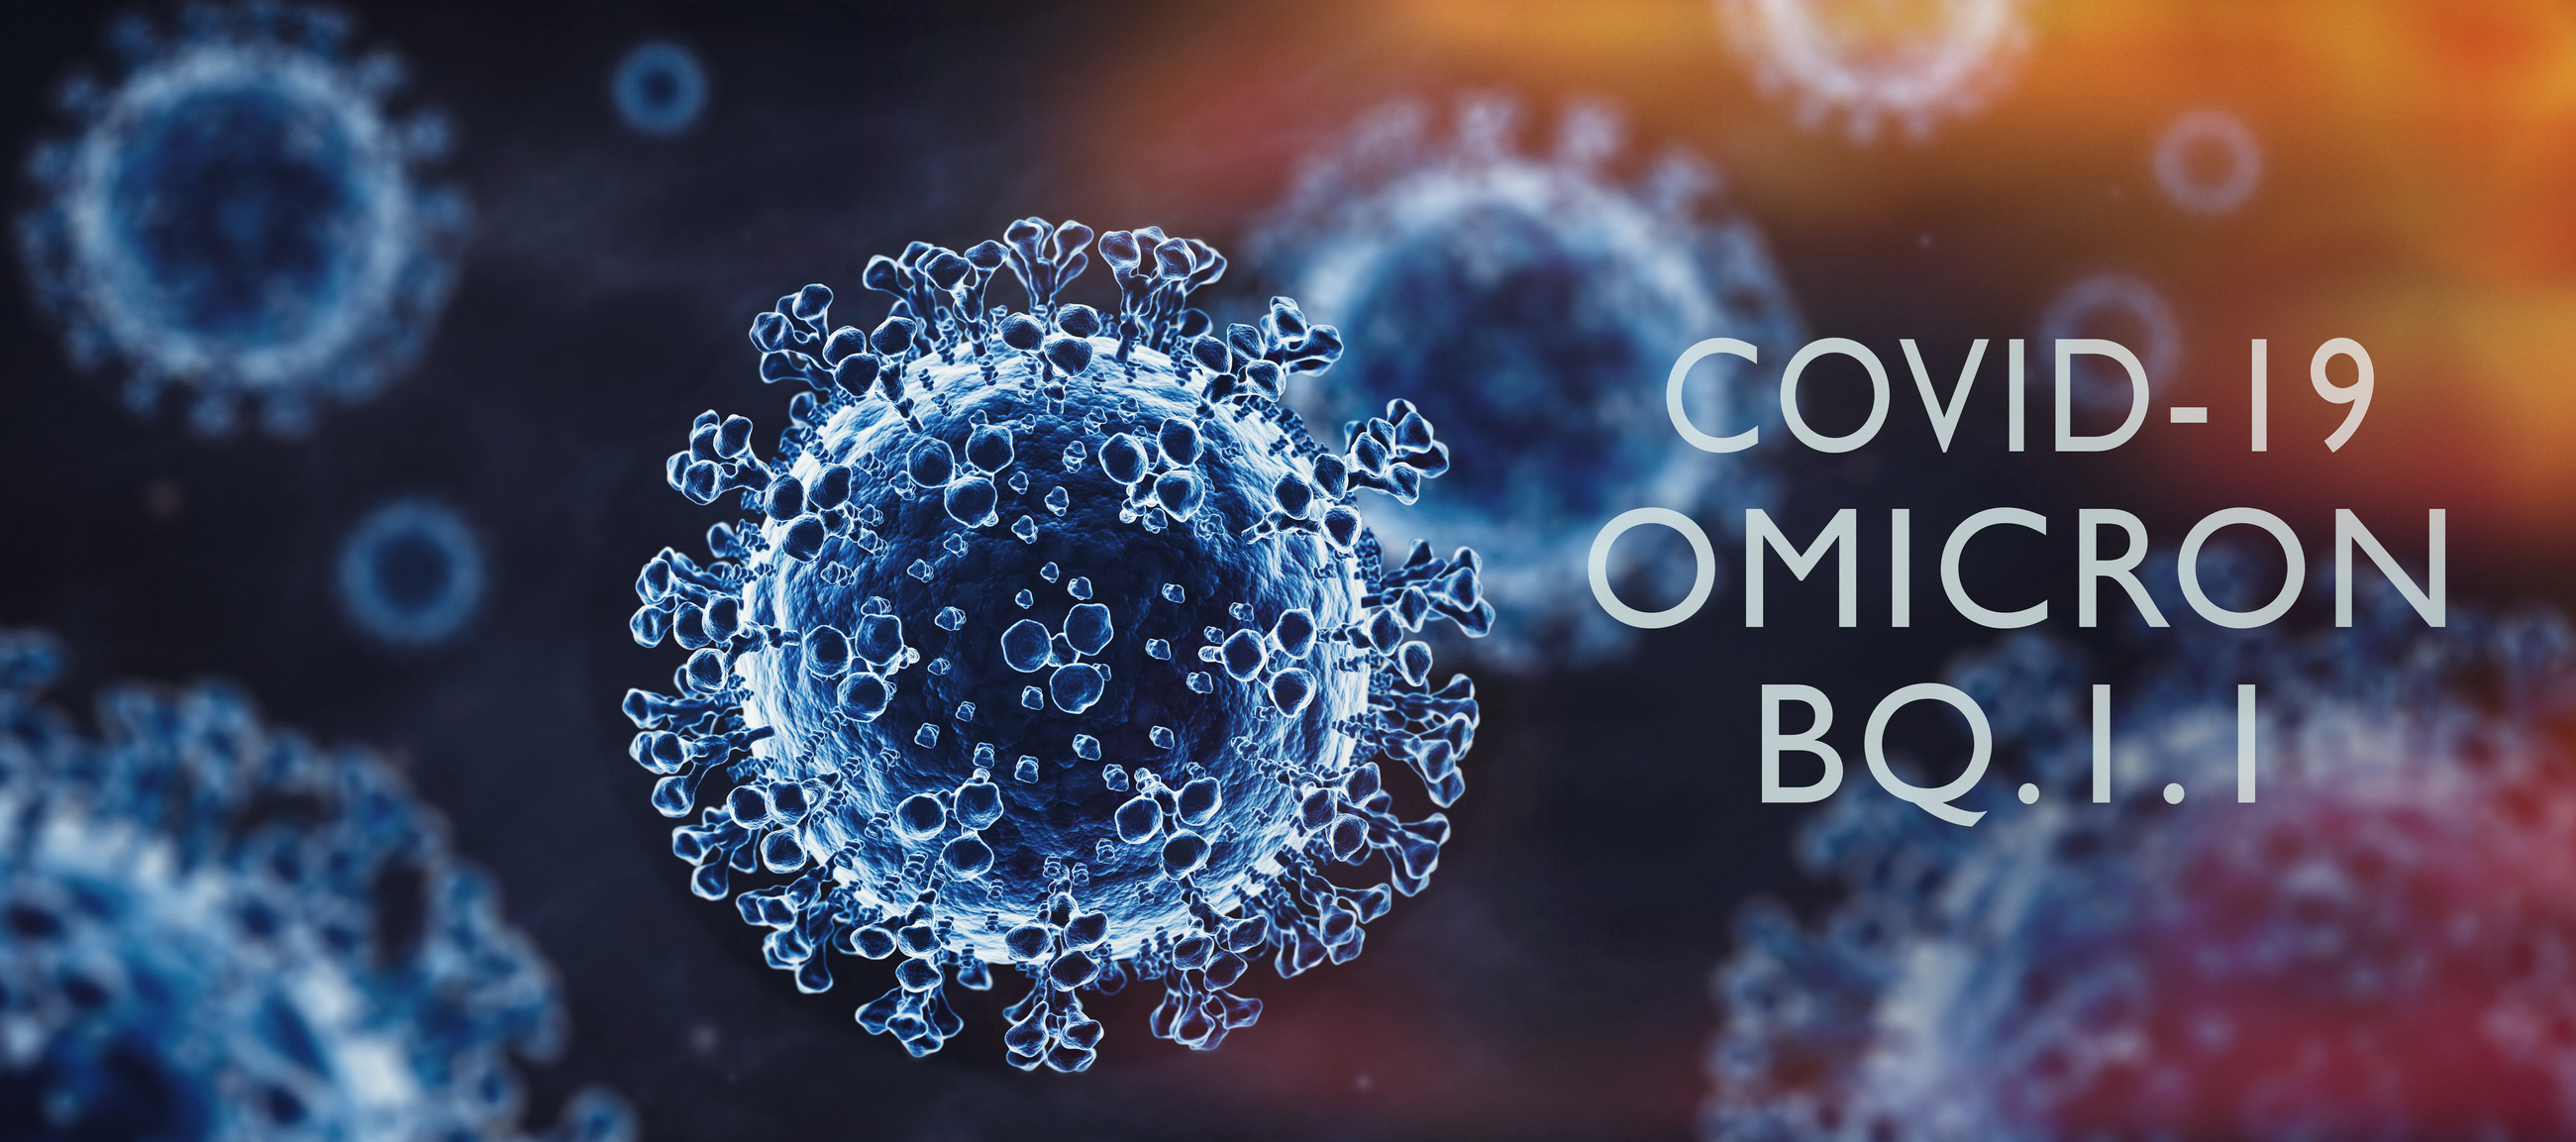 Image of COVID-19 Omicron BQ 1.1 virus